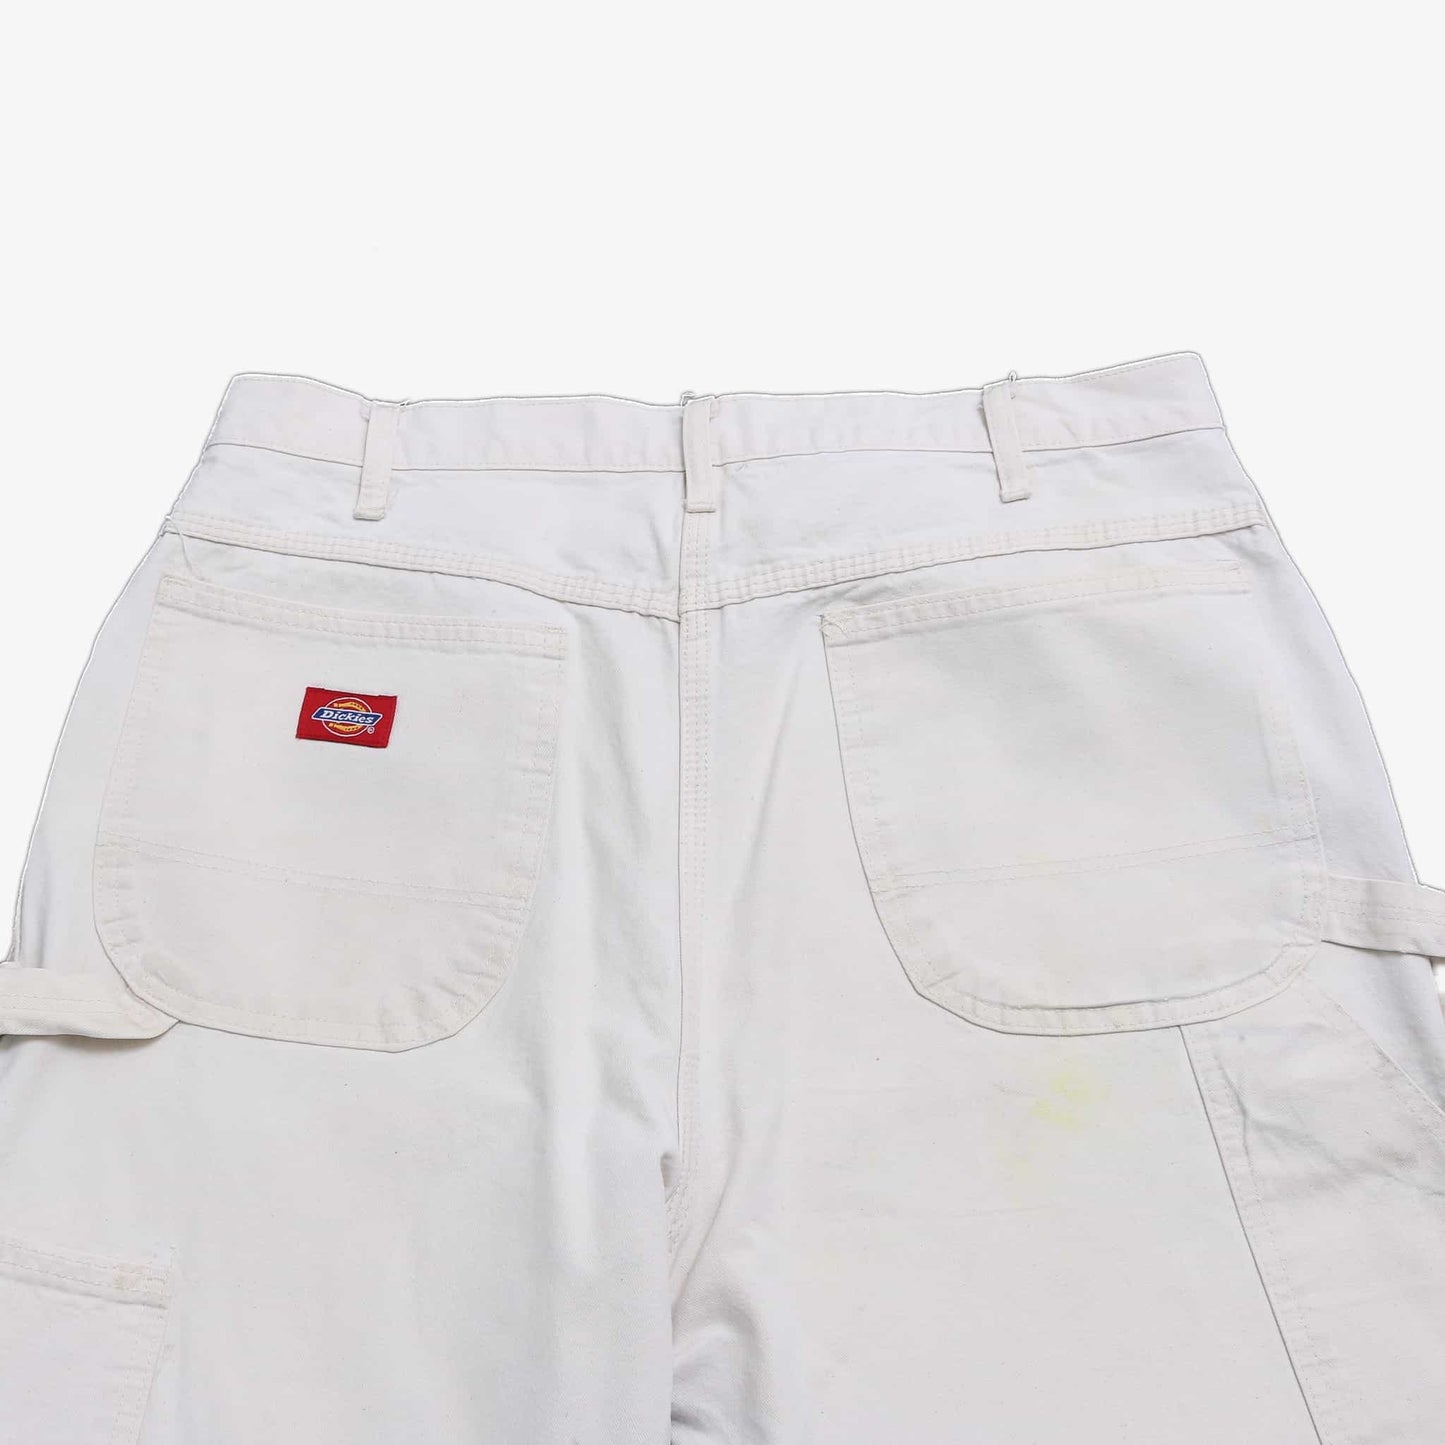 Vintage Carpenter Pants - White - 32/34 - American Madness